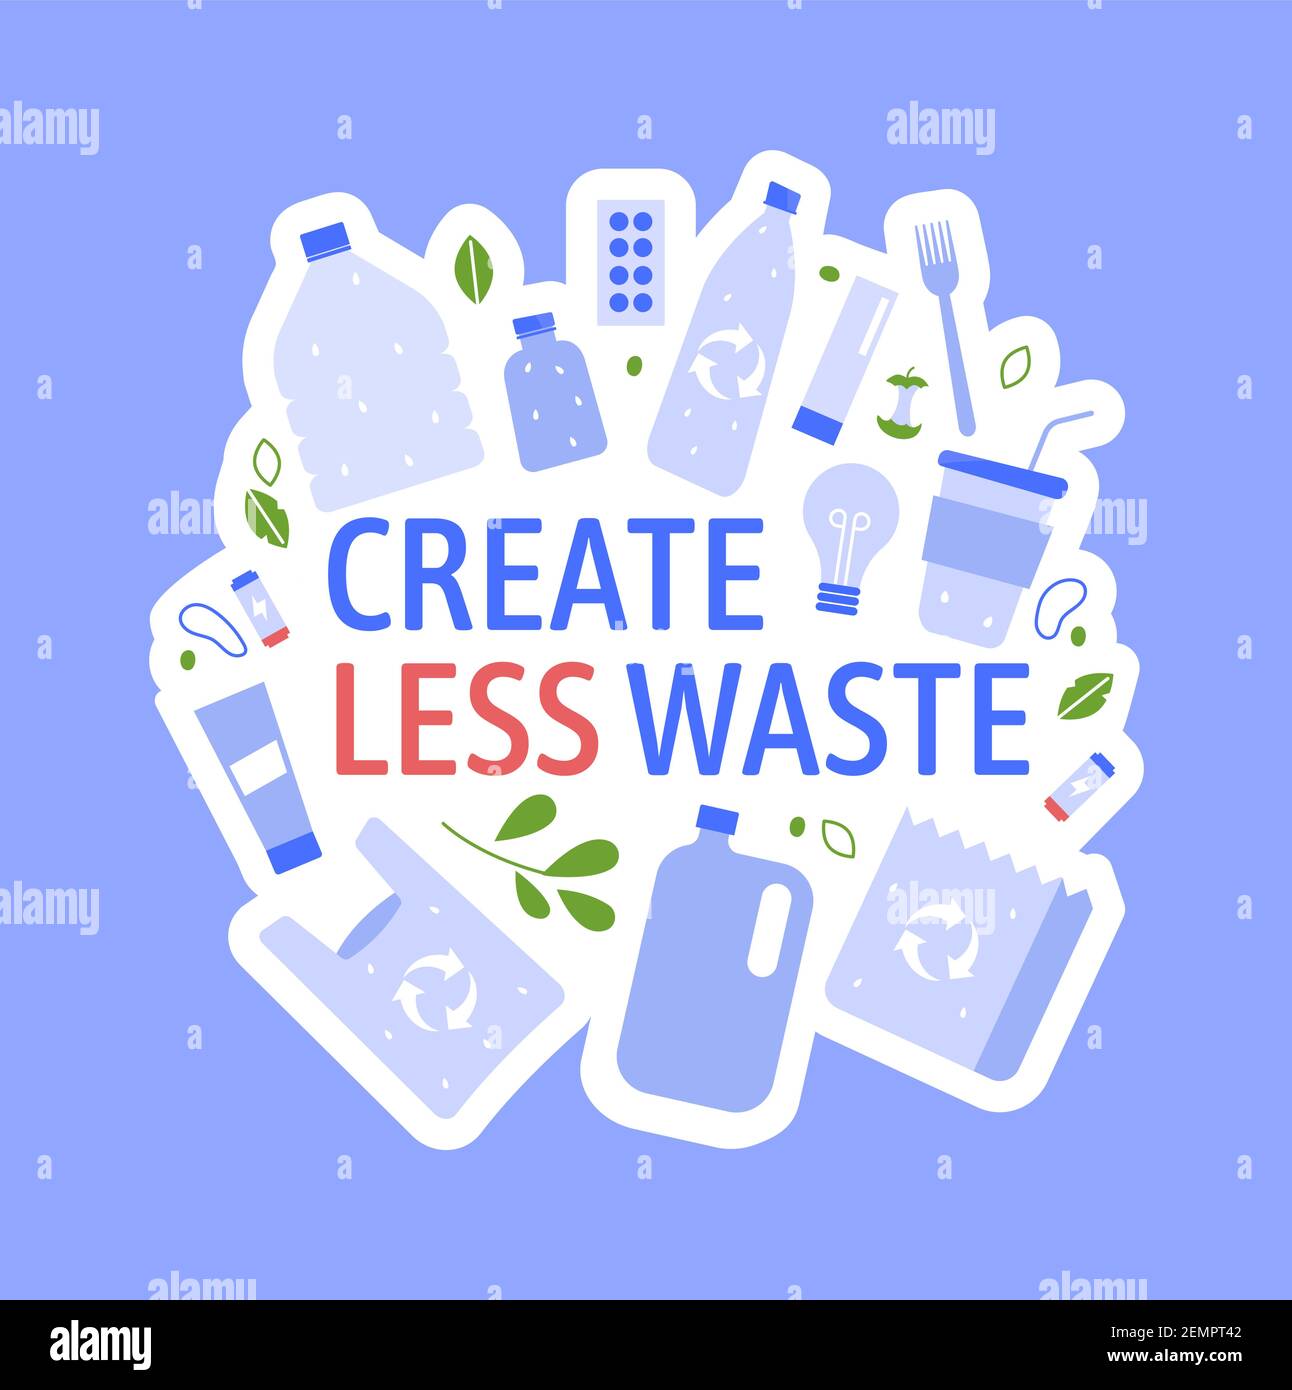 https://c8.alamy.com/comp/2EMPT42/create-less-waste-concept-vector-zero-waste-plastic-waste-2EMPT42.jpg